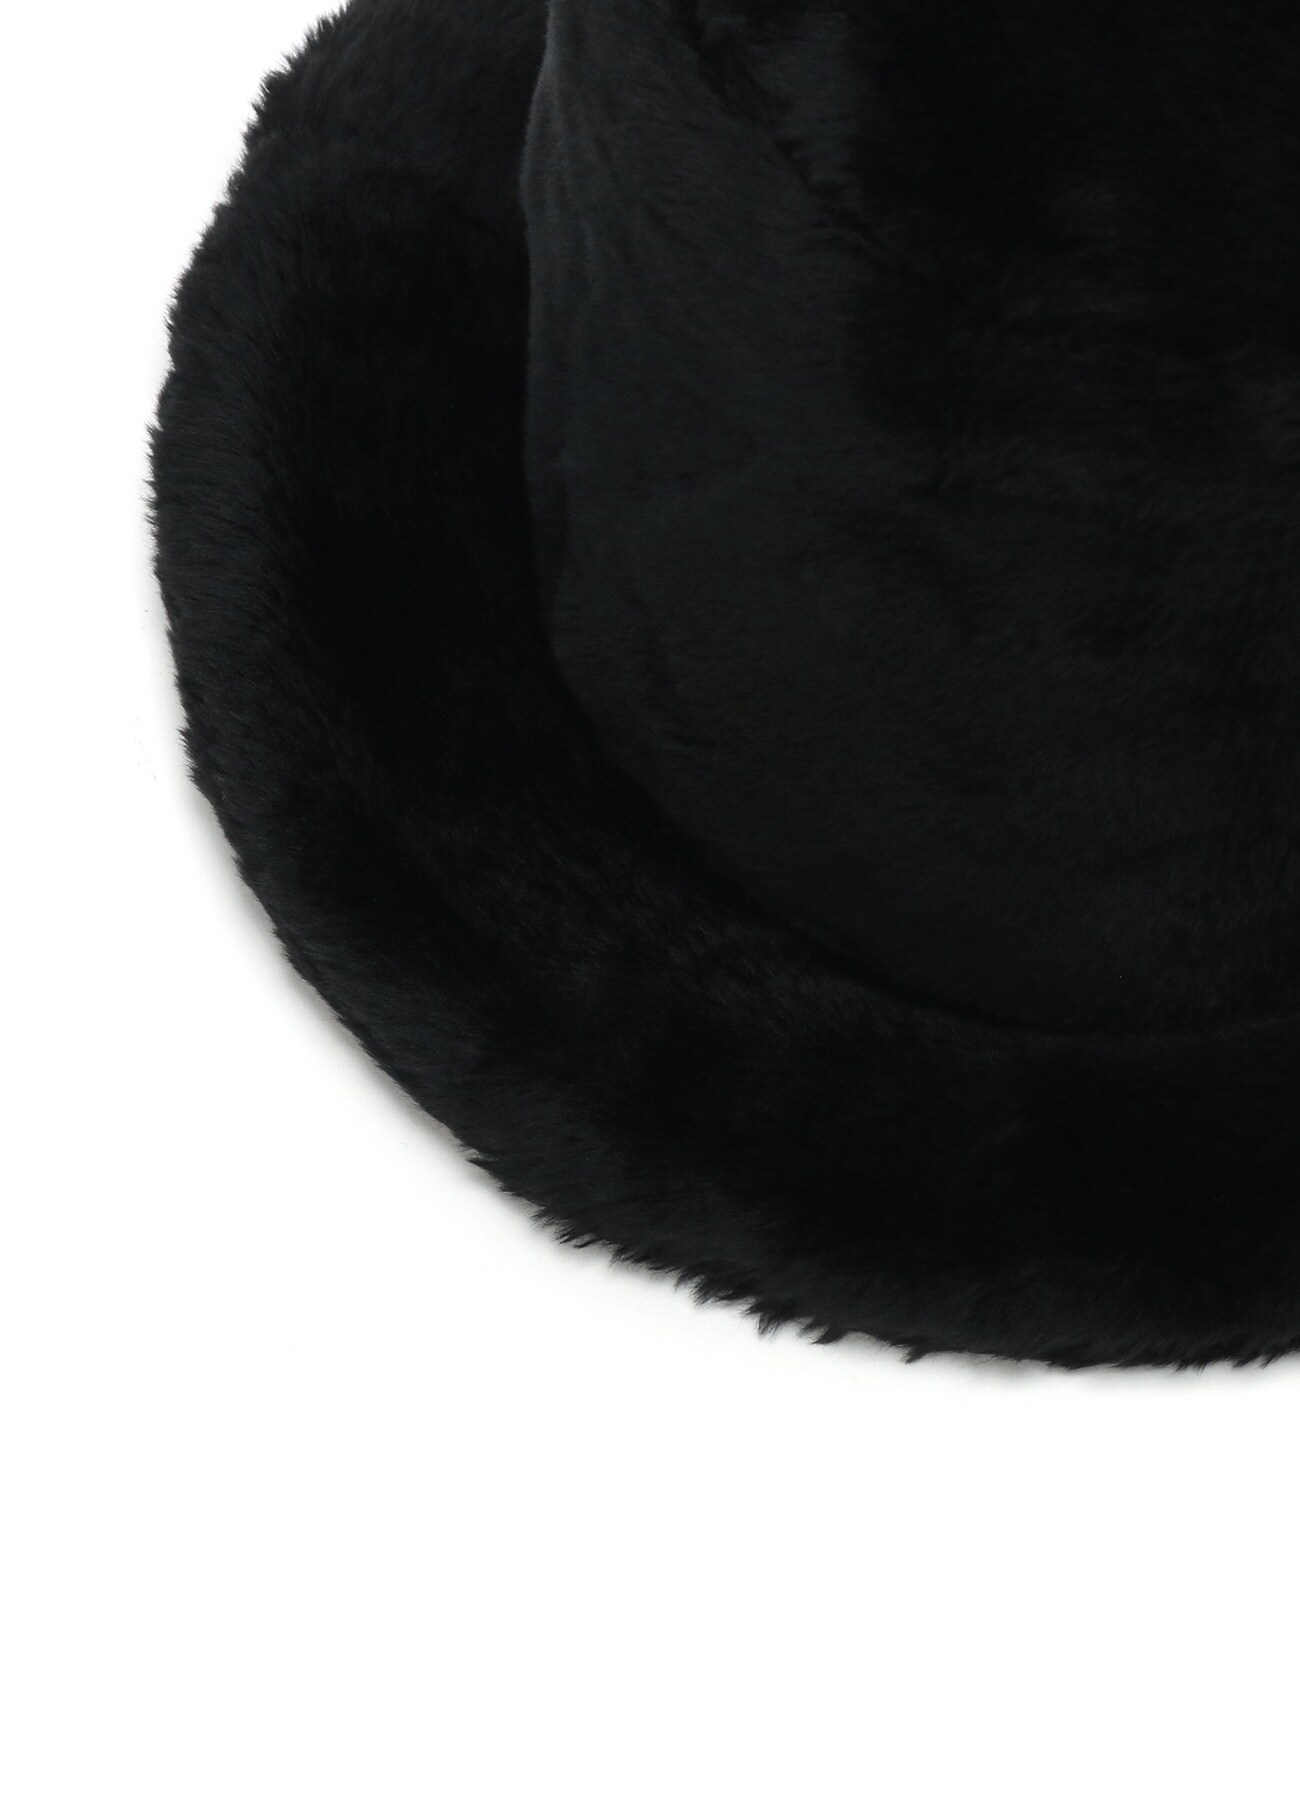 Ac/Fake fur Top Hat A